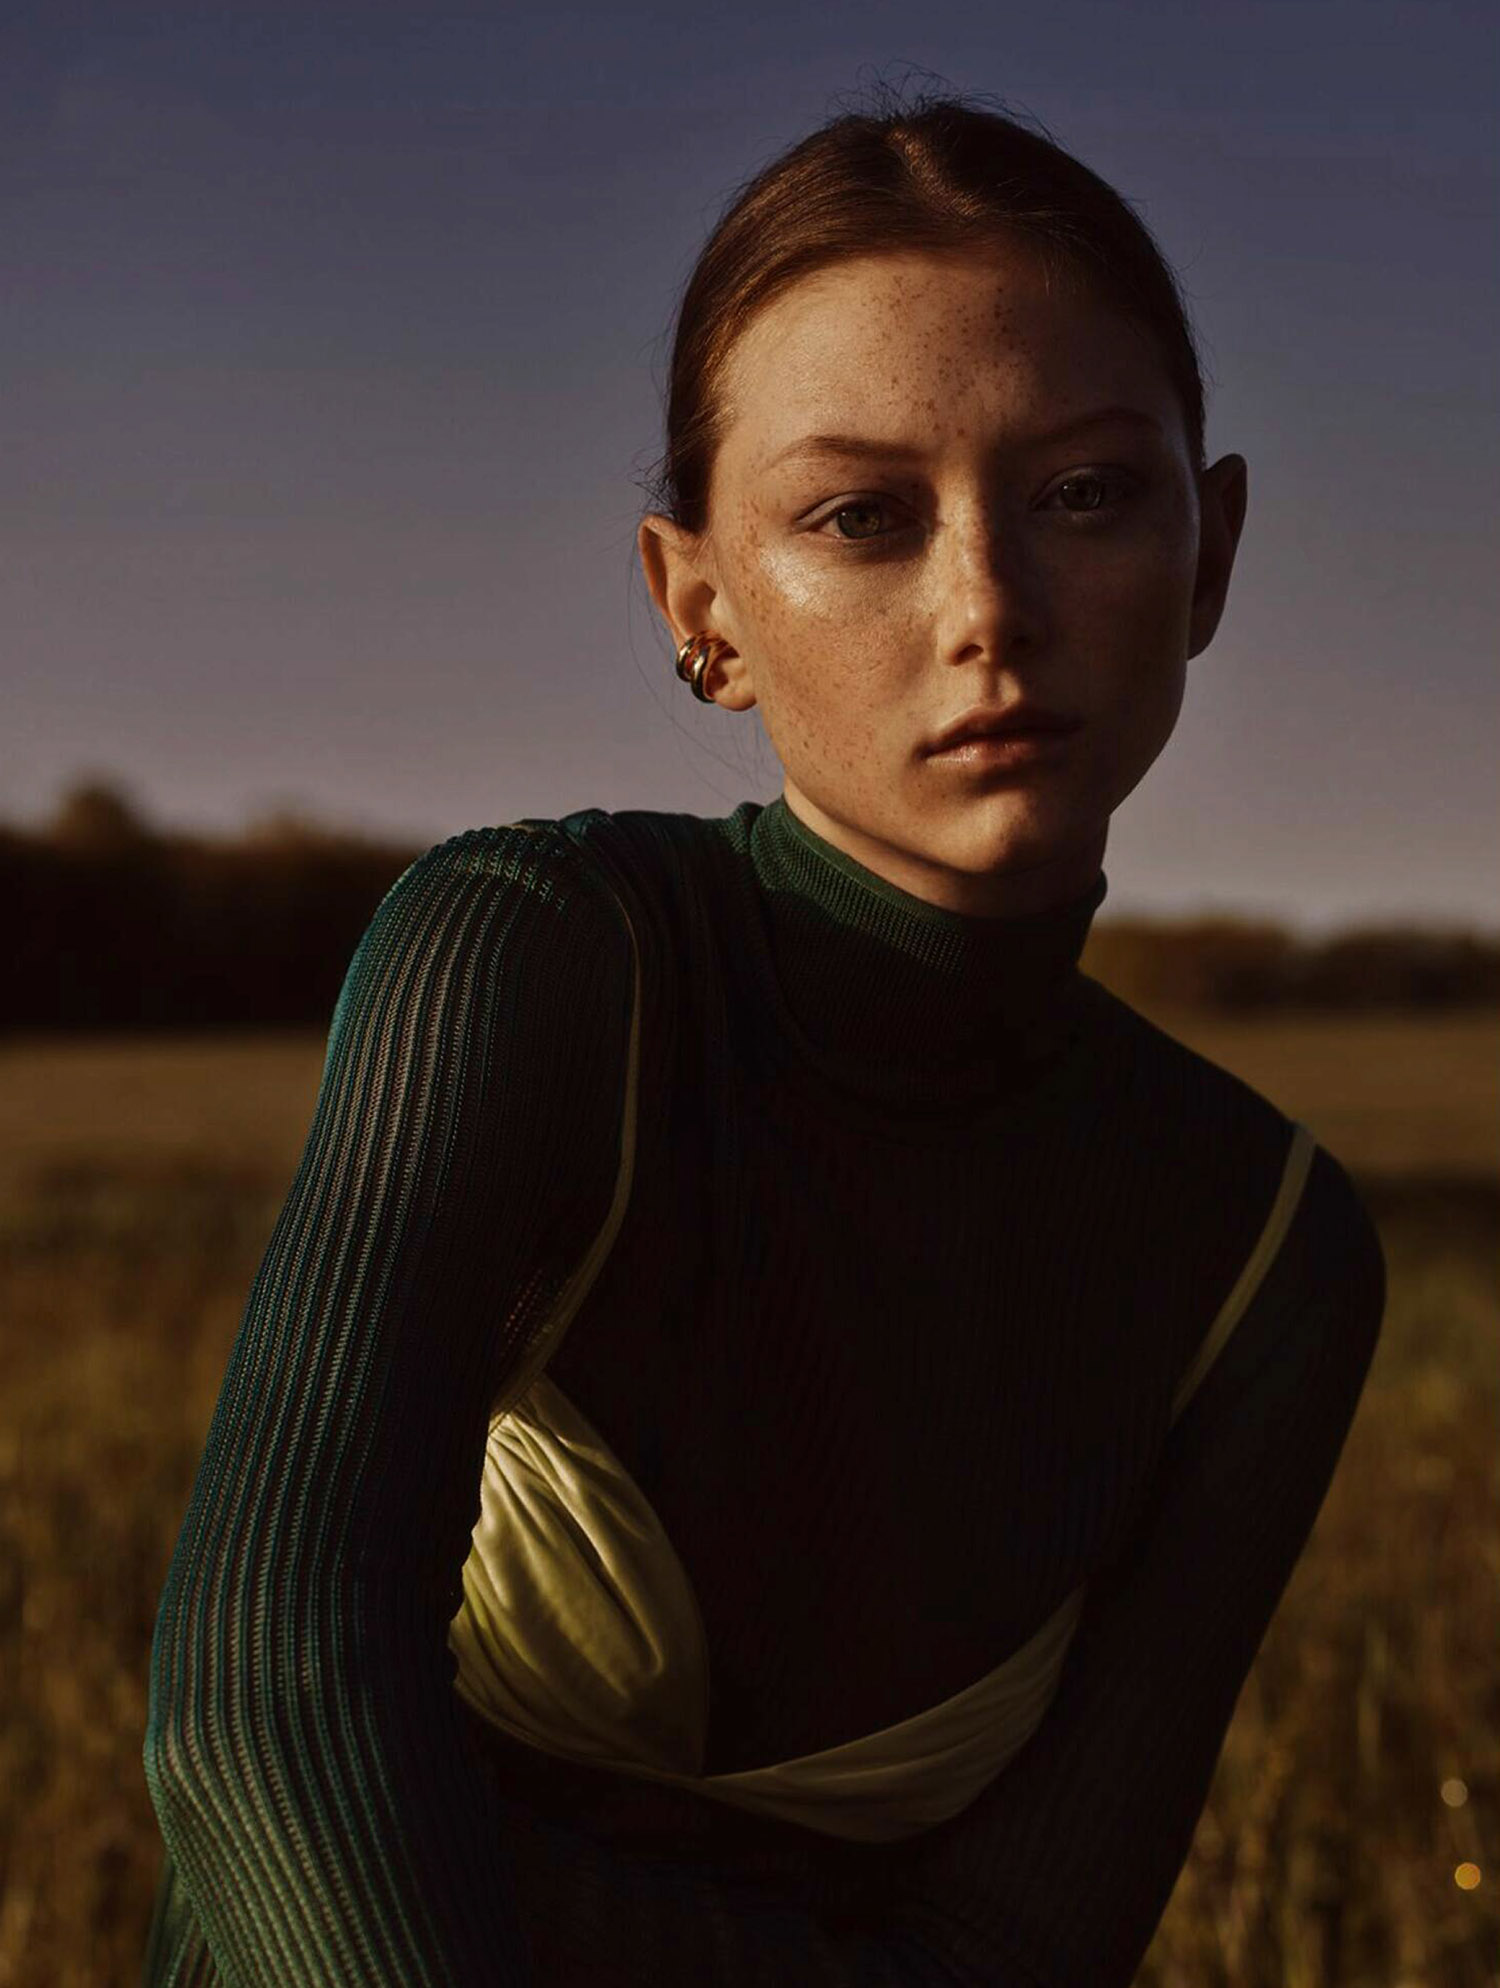 Sara Grace Wallerstedt by Geordie Wood for Vogue Australia July 2021